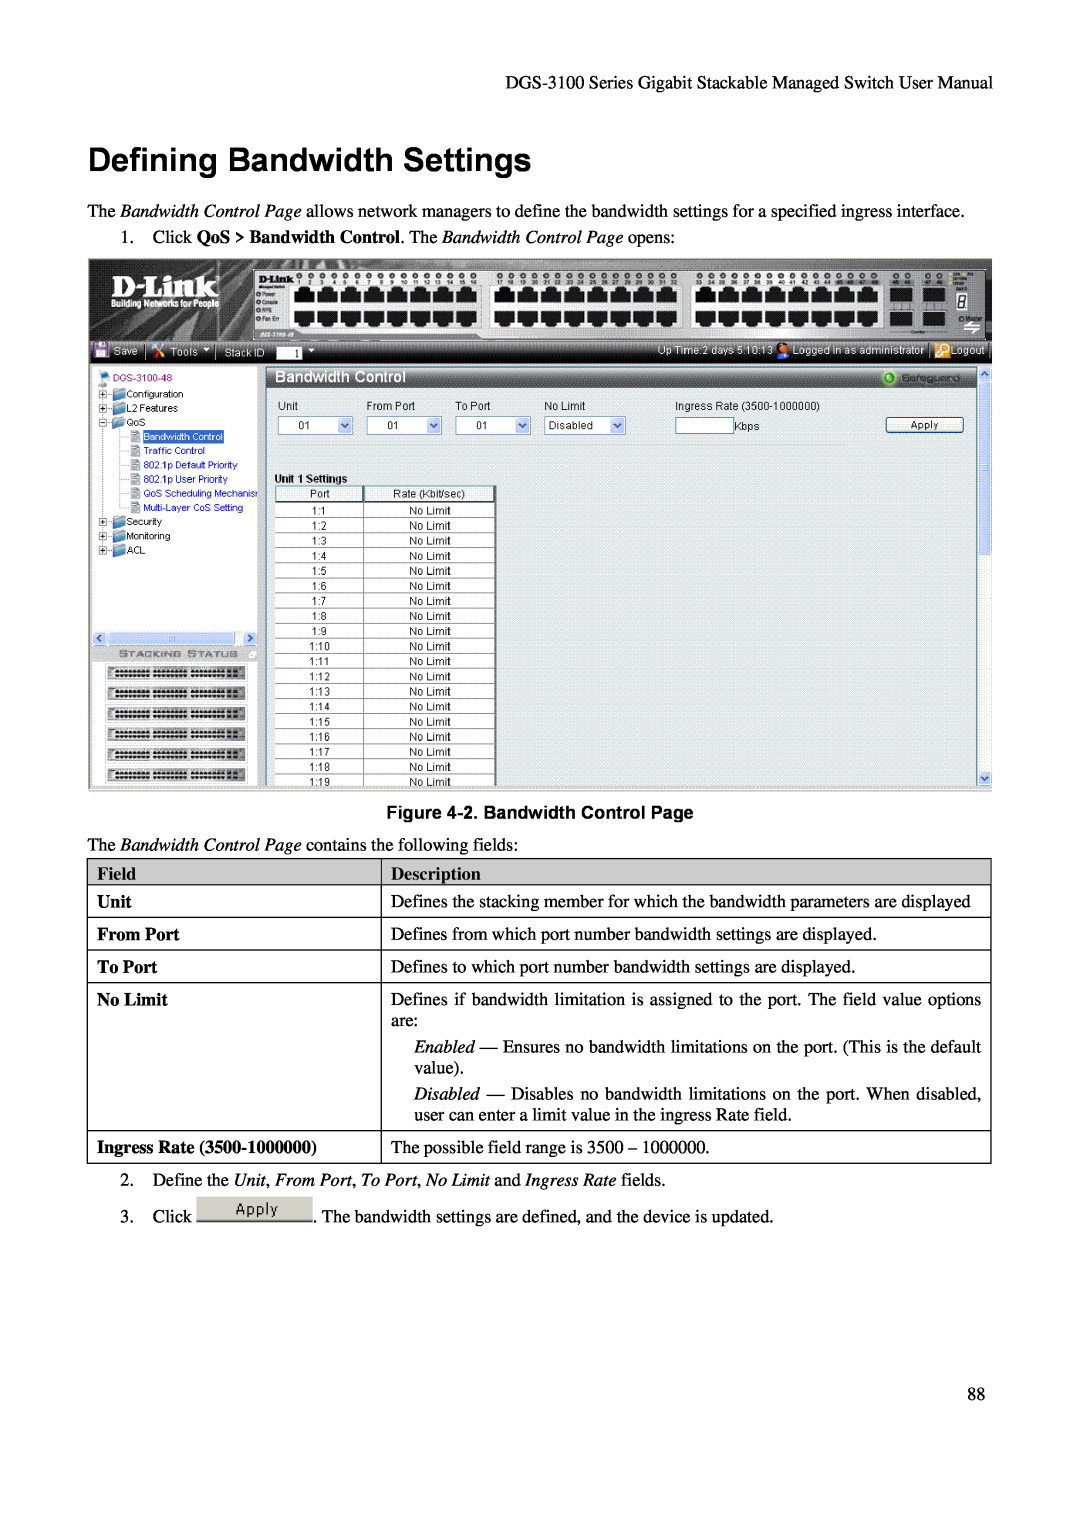 D-Link DGS-3100 Defining Bandwidth Settings, Click QoS Bandwidth Control. The Bandwidth Control Page opens, Field, Unit 